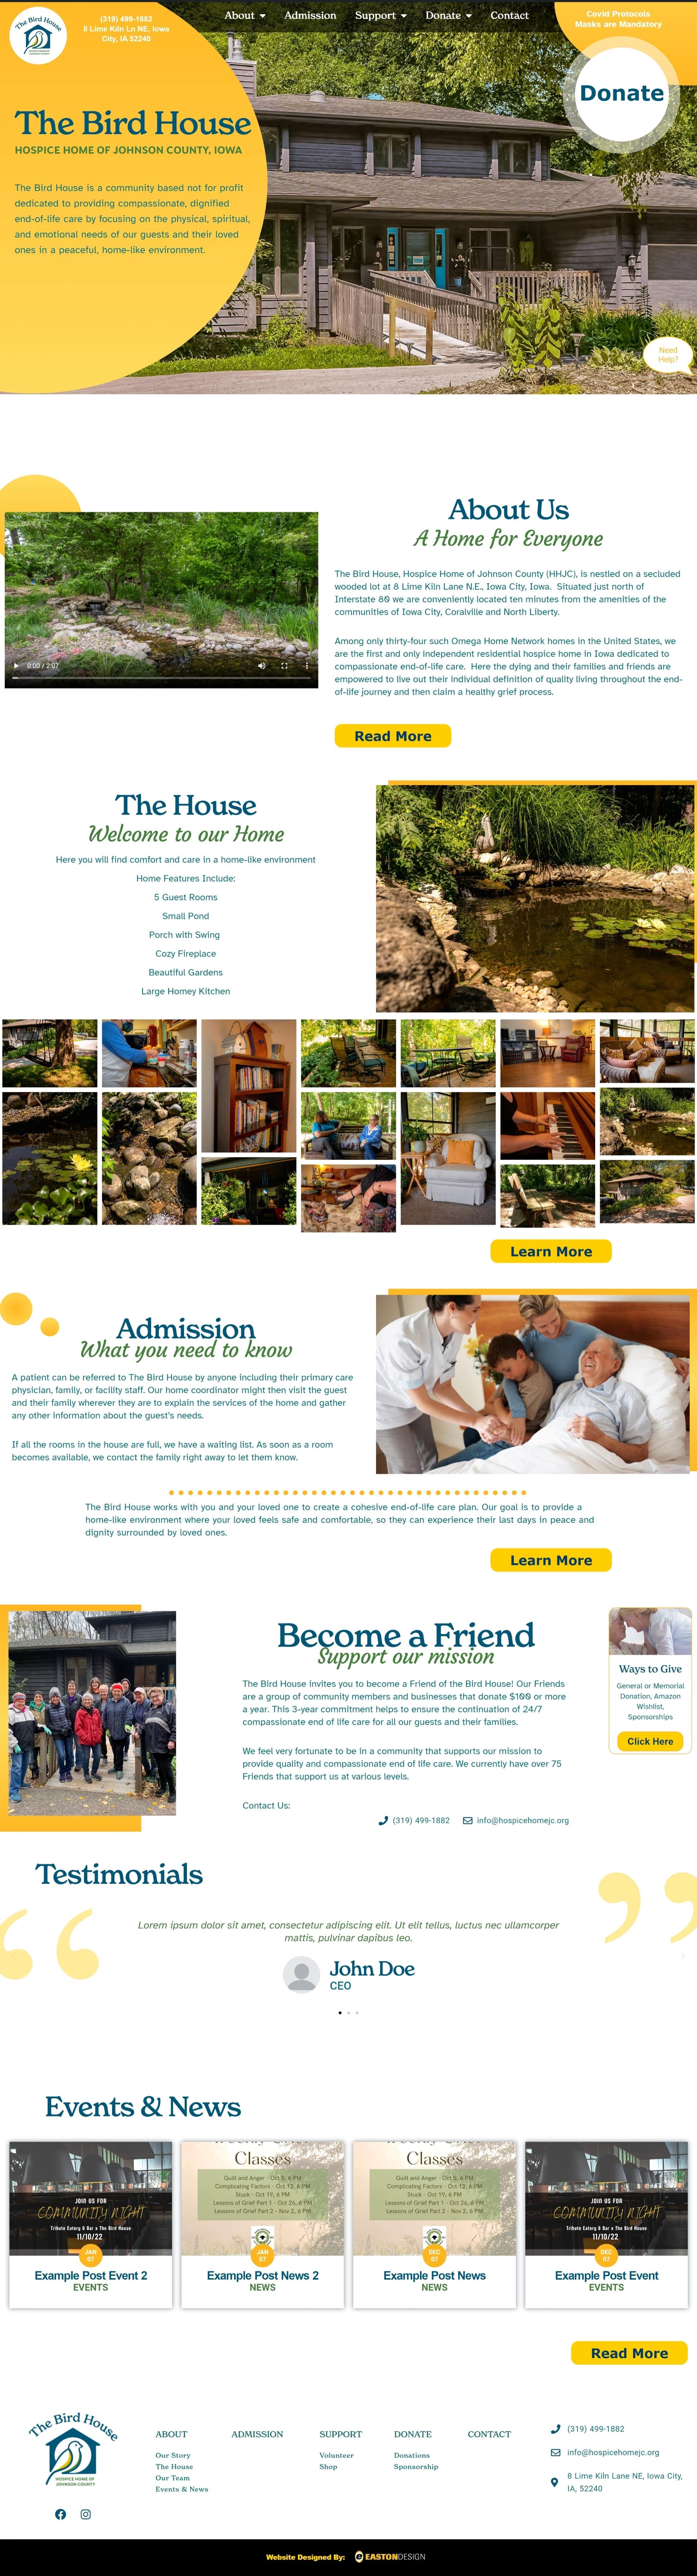 The Bird House Mockup Website Design